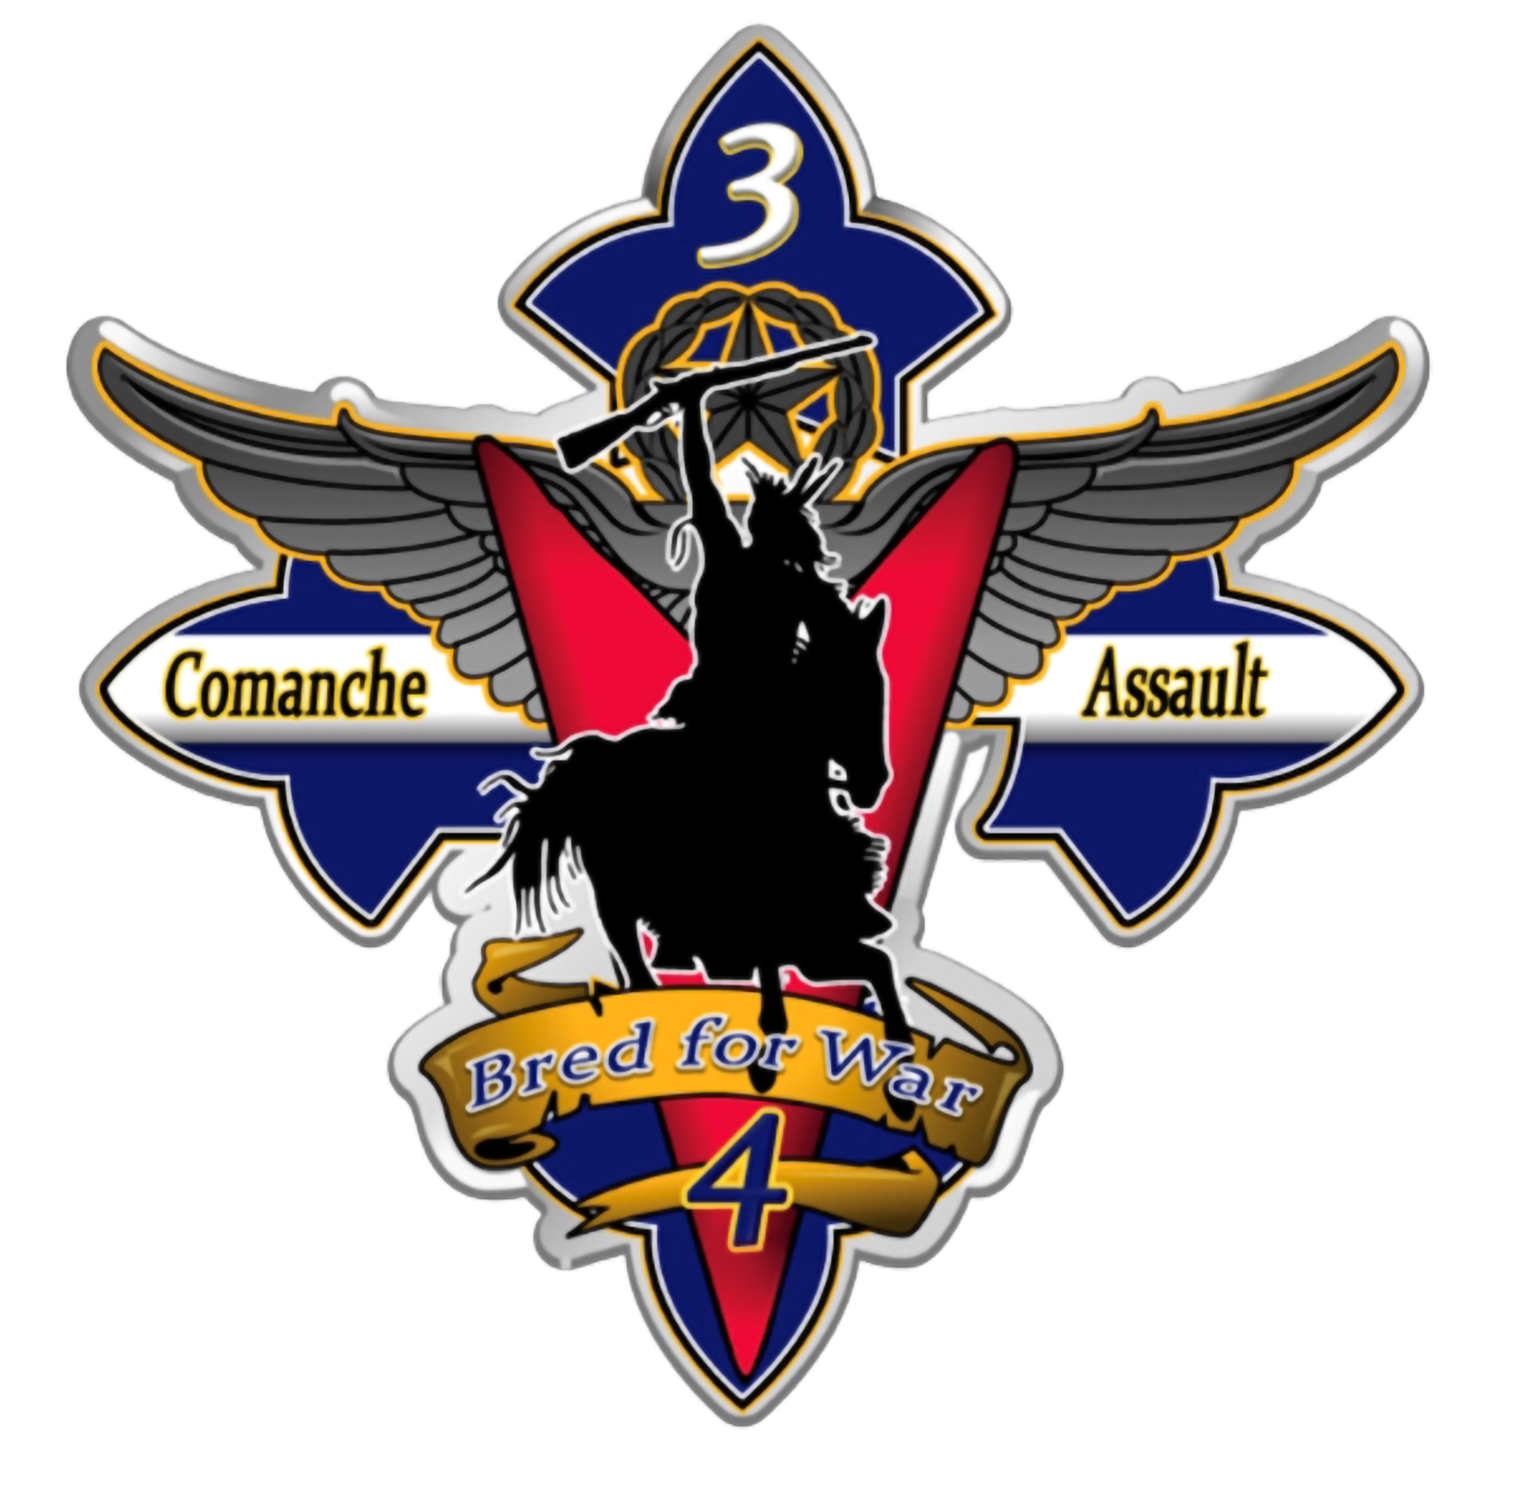 3-4 AHB "Comanche Assault"